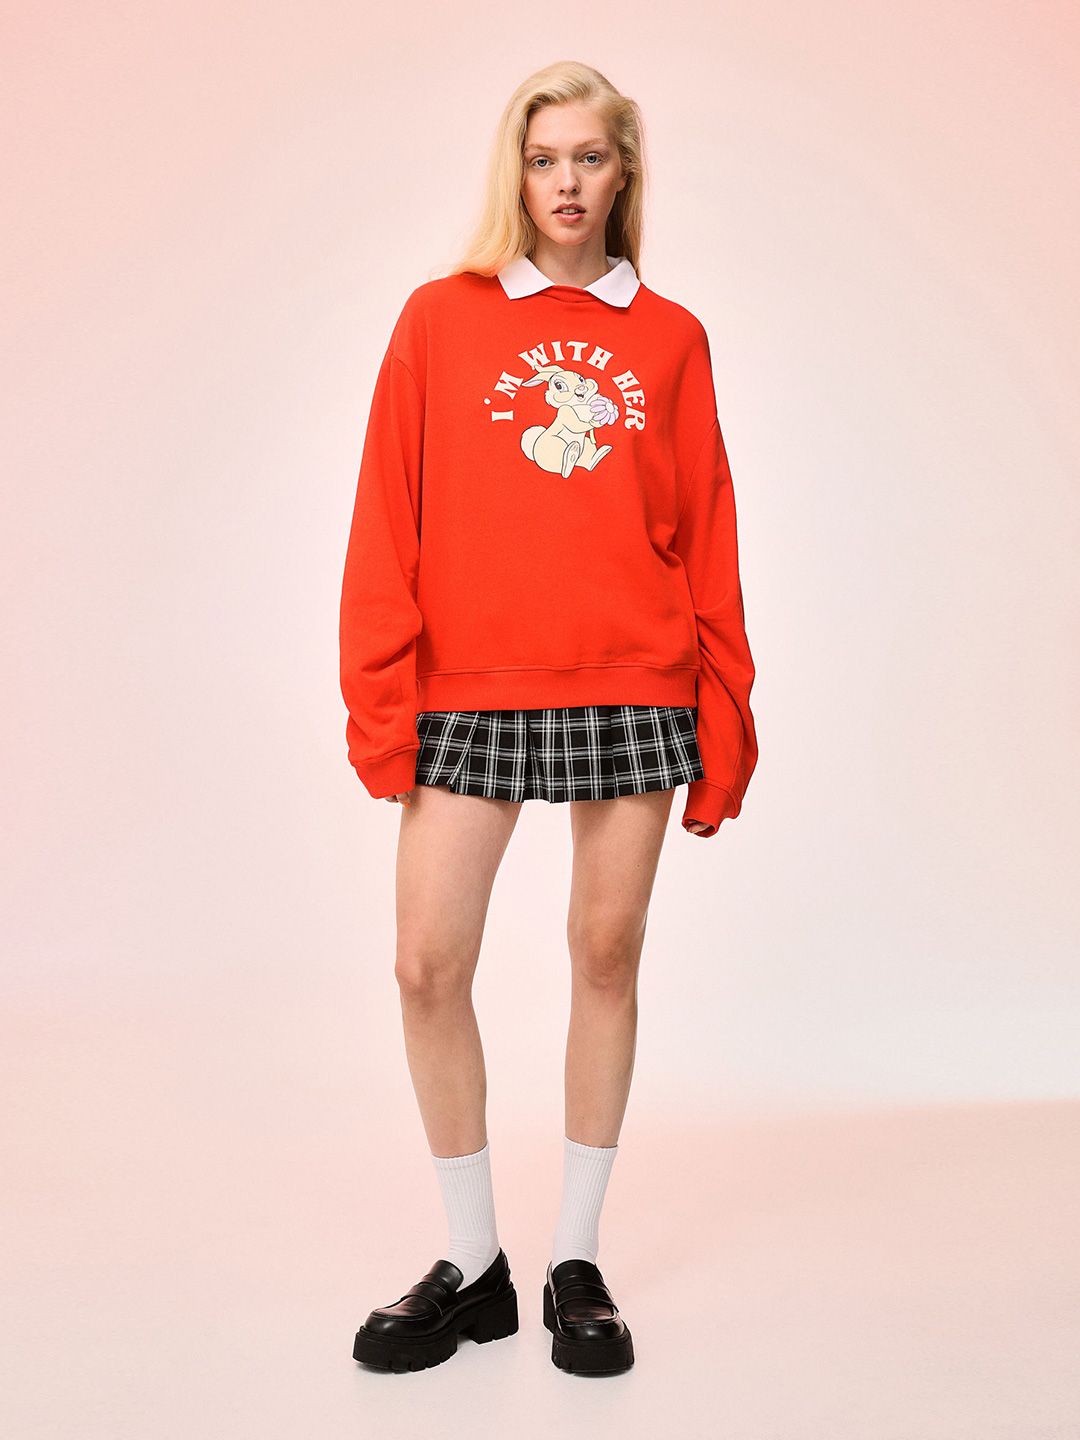 H&M Women Orange Printed Collared Sweatshirt Price in India